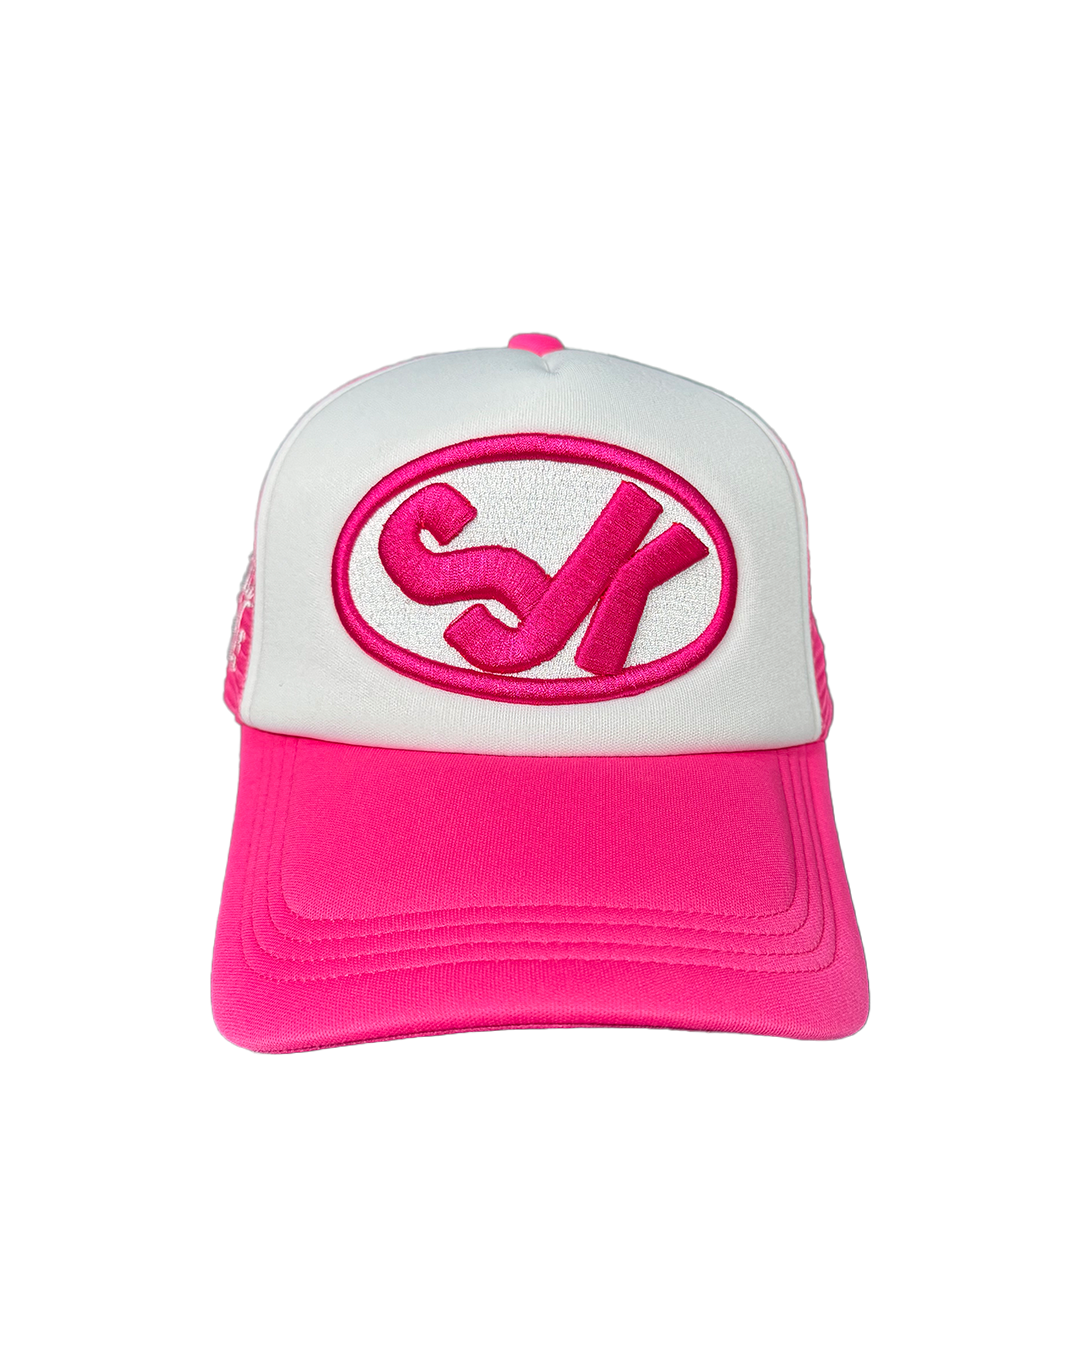 South Kids Pink Trucker Hat